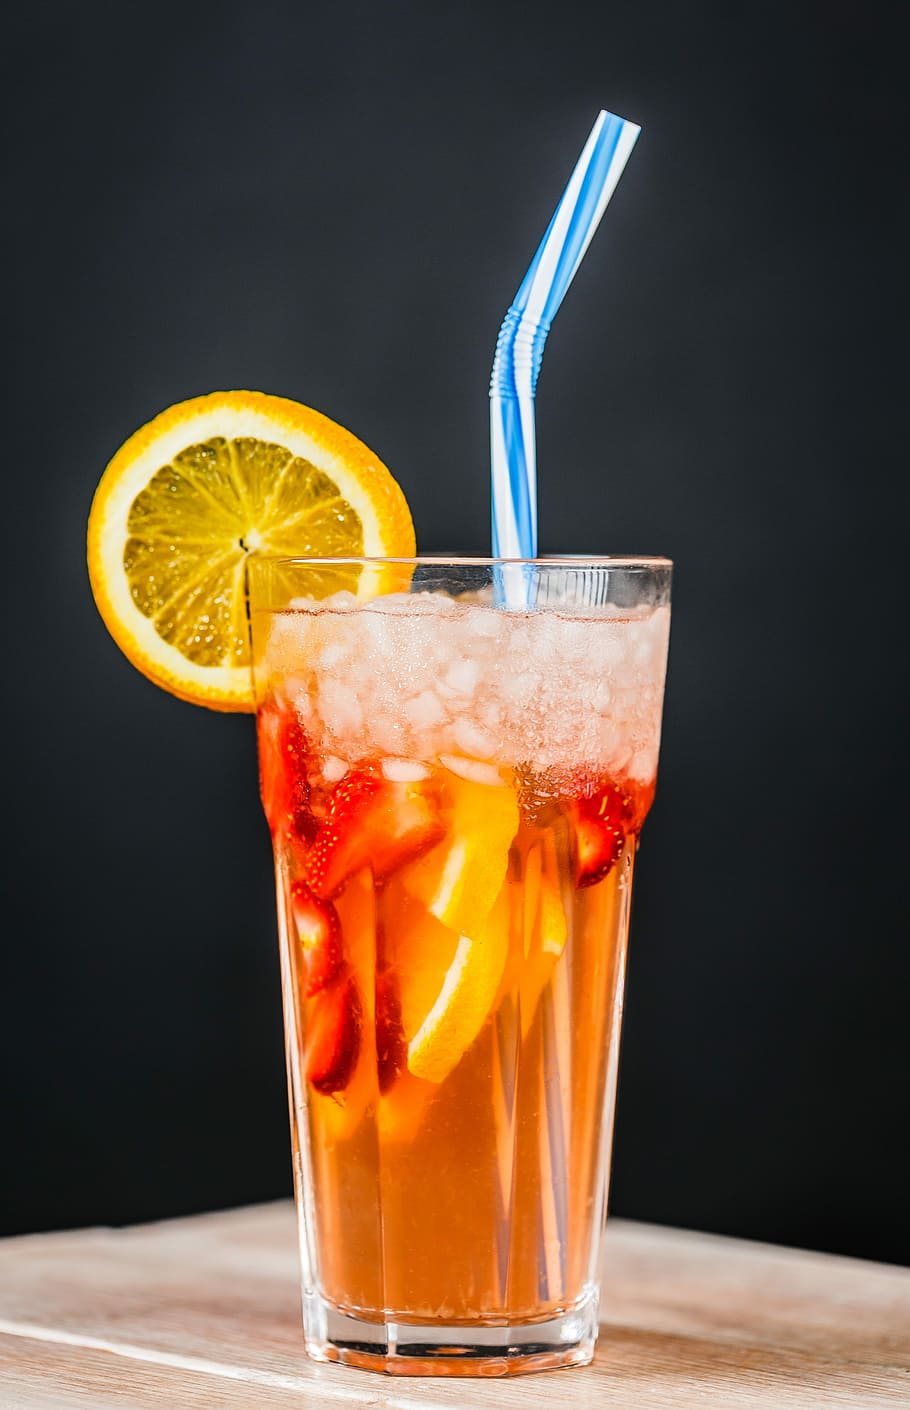 orange, strawberry juice, lemon, glass, drink, coldly, health, cocktail, air, glass tumbler